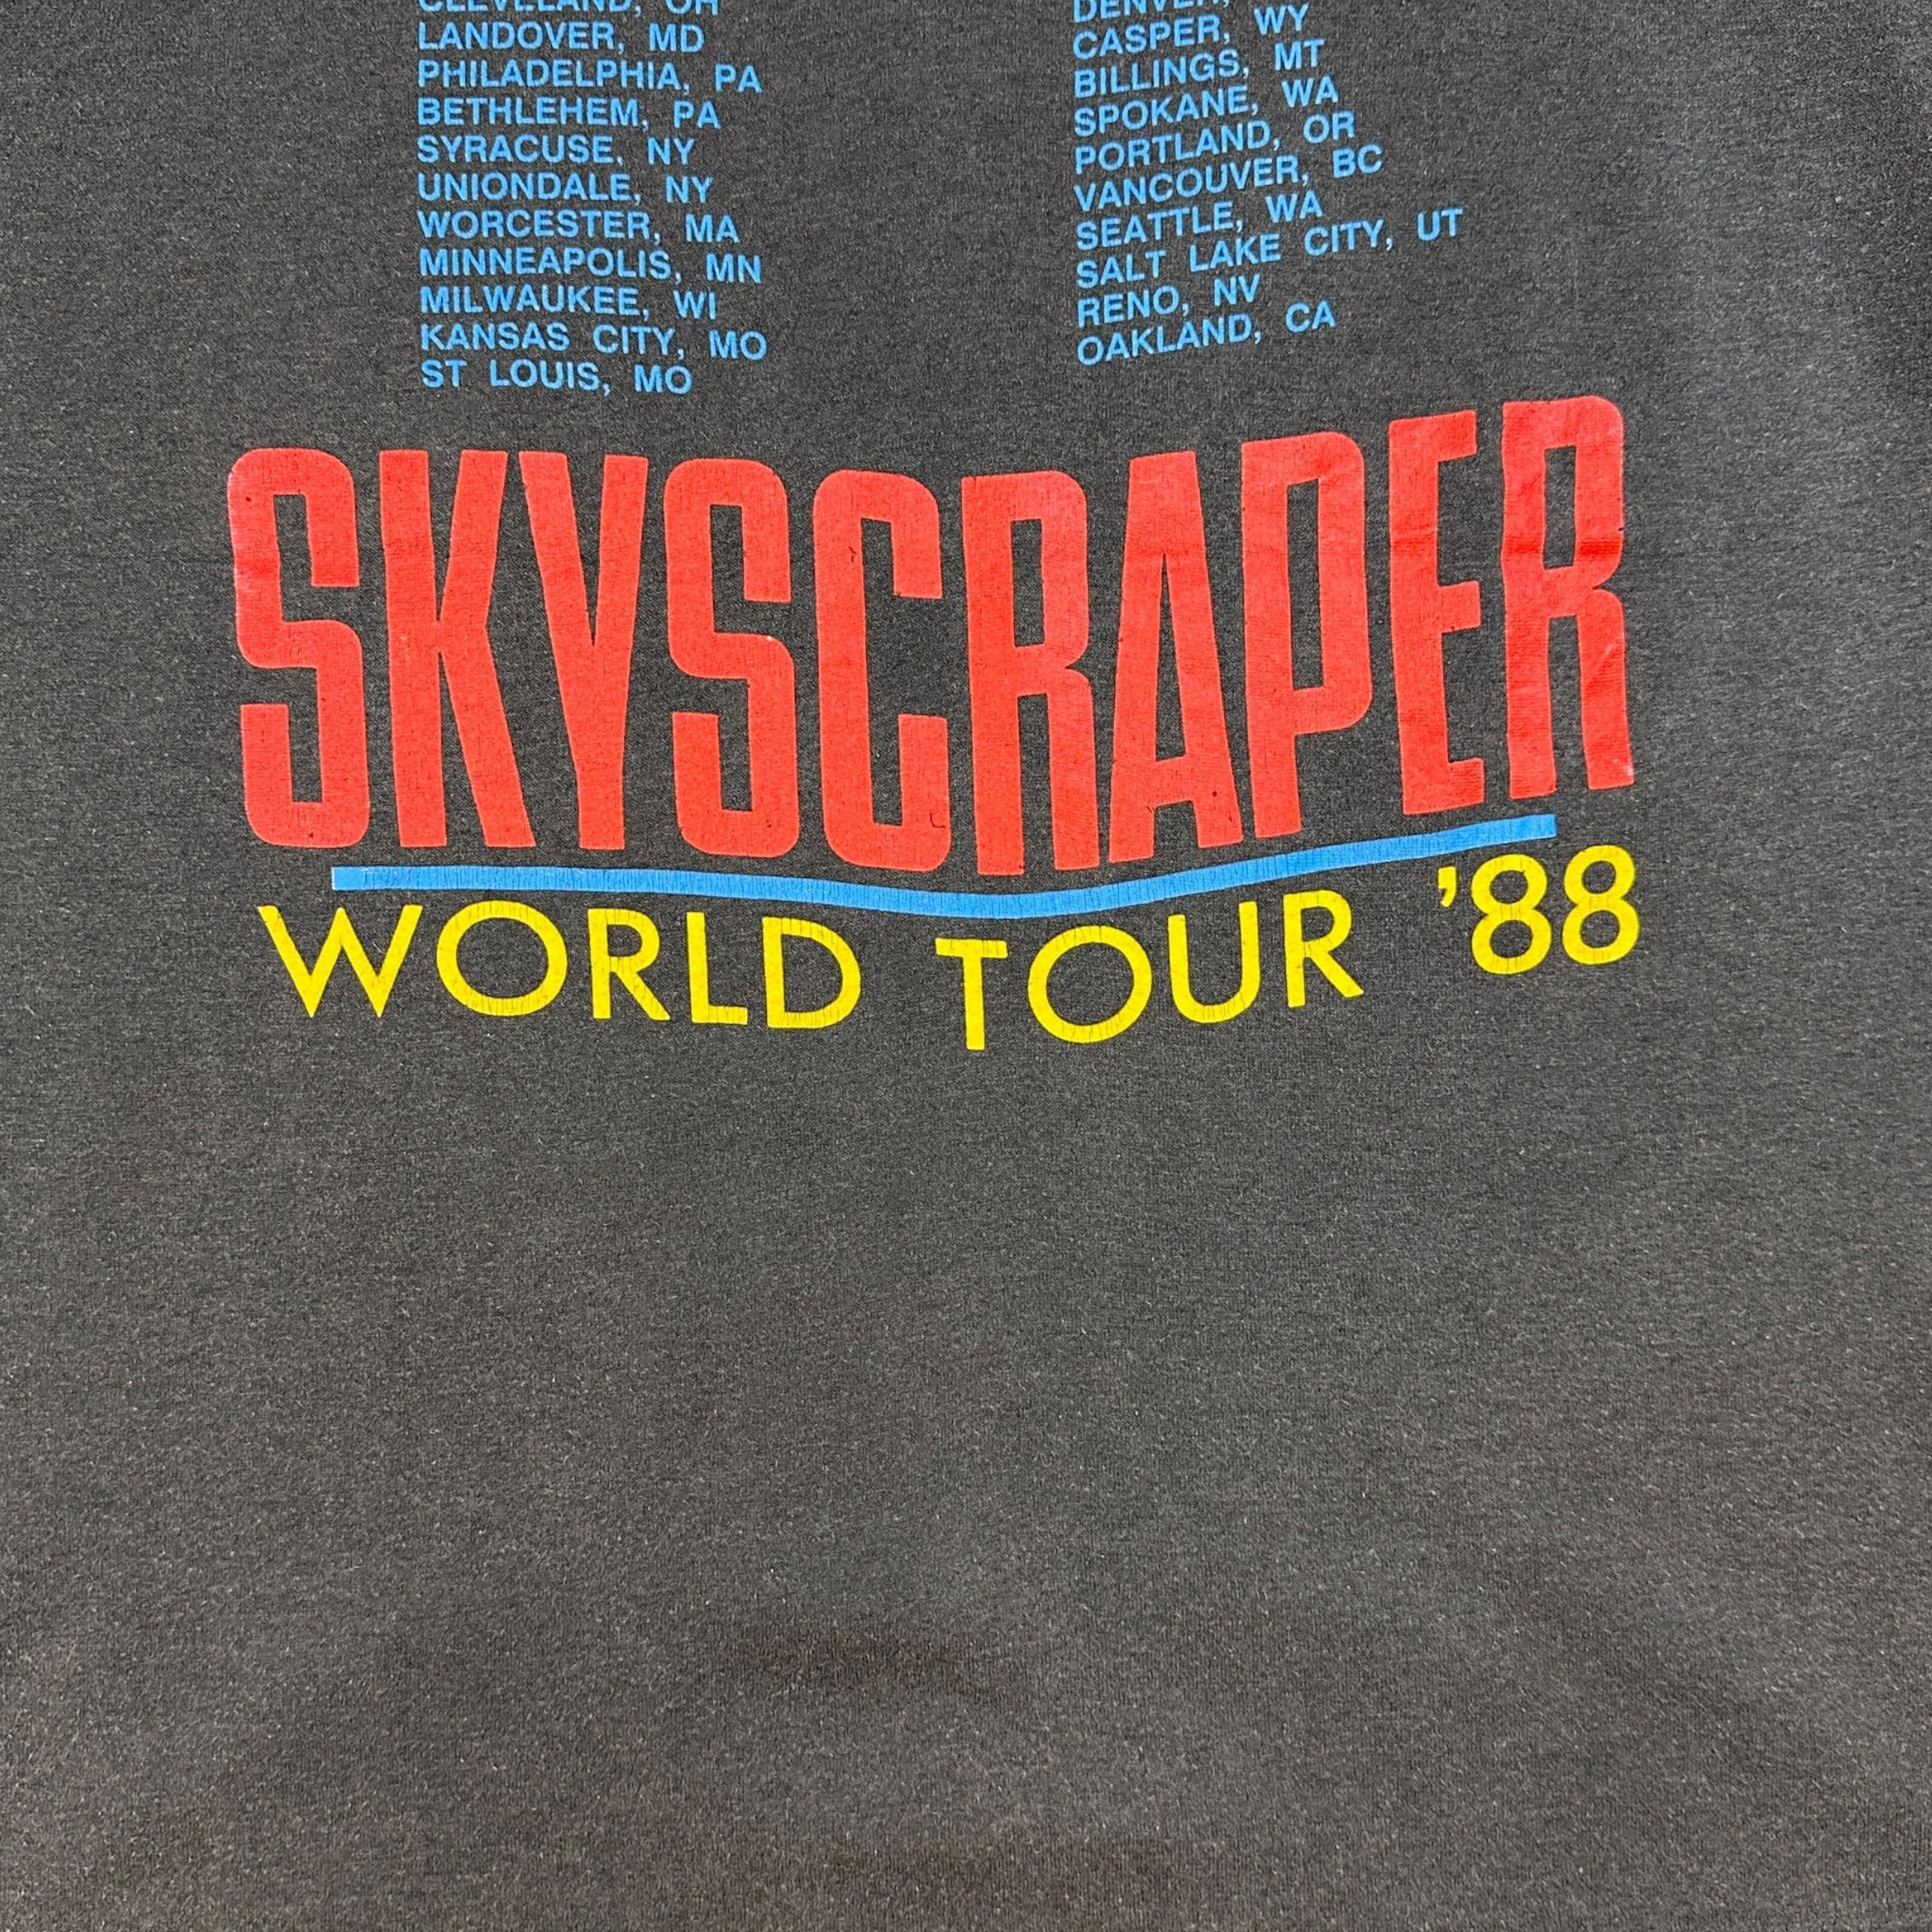 1988 David Lee Roth Skyscraper Graphic T-Shirt